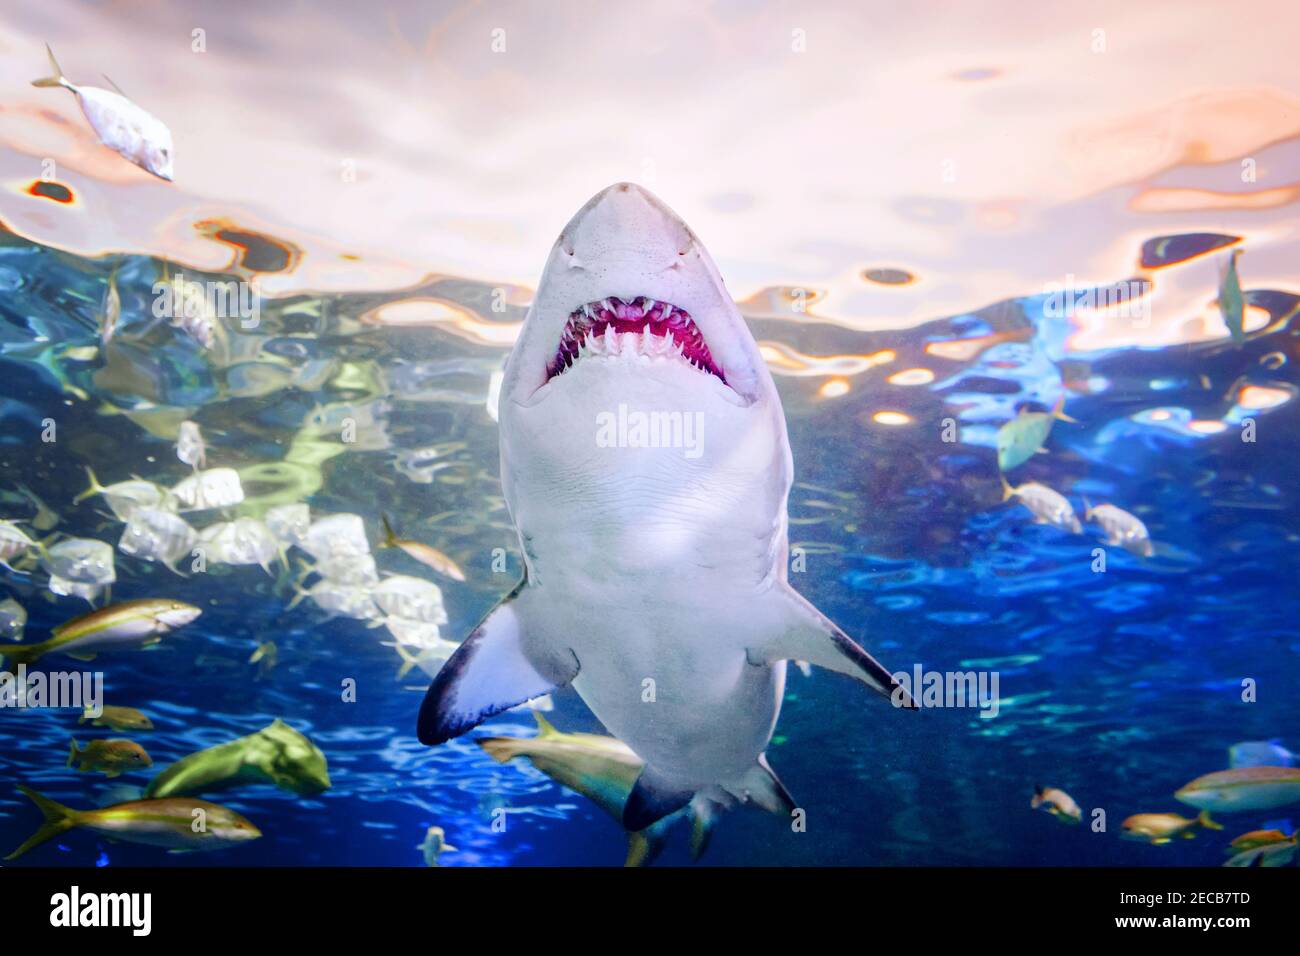 Giant scary shark with big teeth mouth under water in aquarium. Sea ocean marine wildlife predator dangerous animal swimming in blue water. Underwater Stock Photo